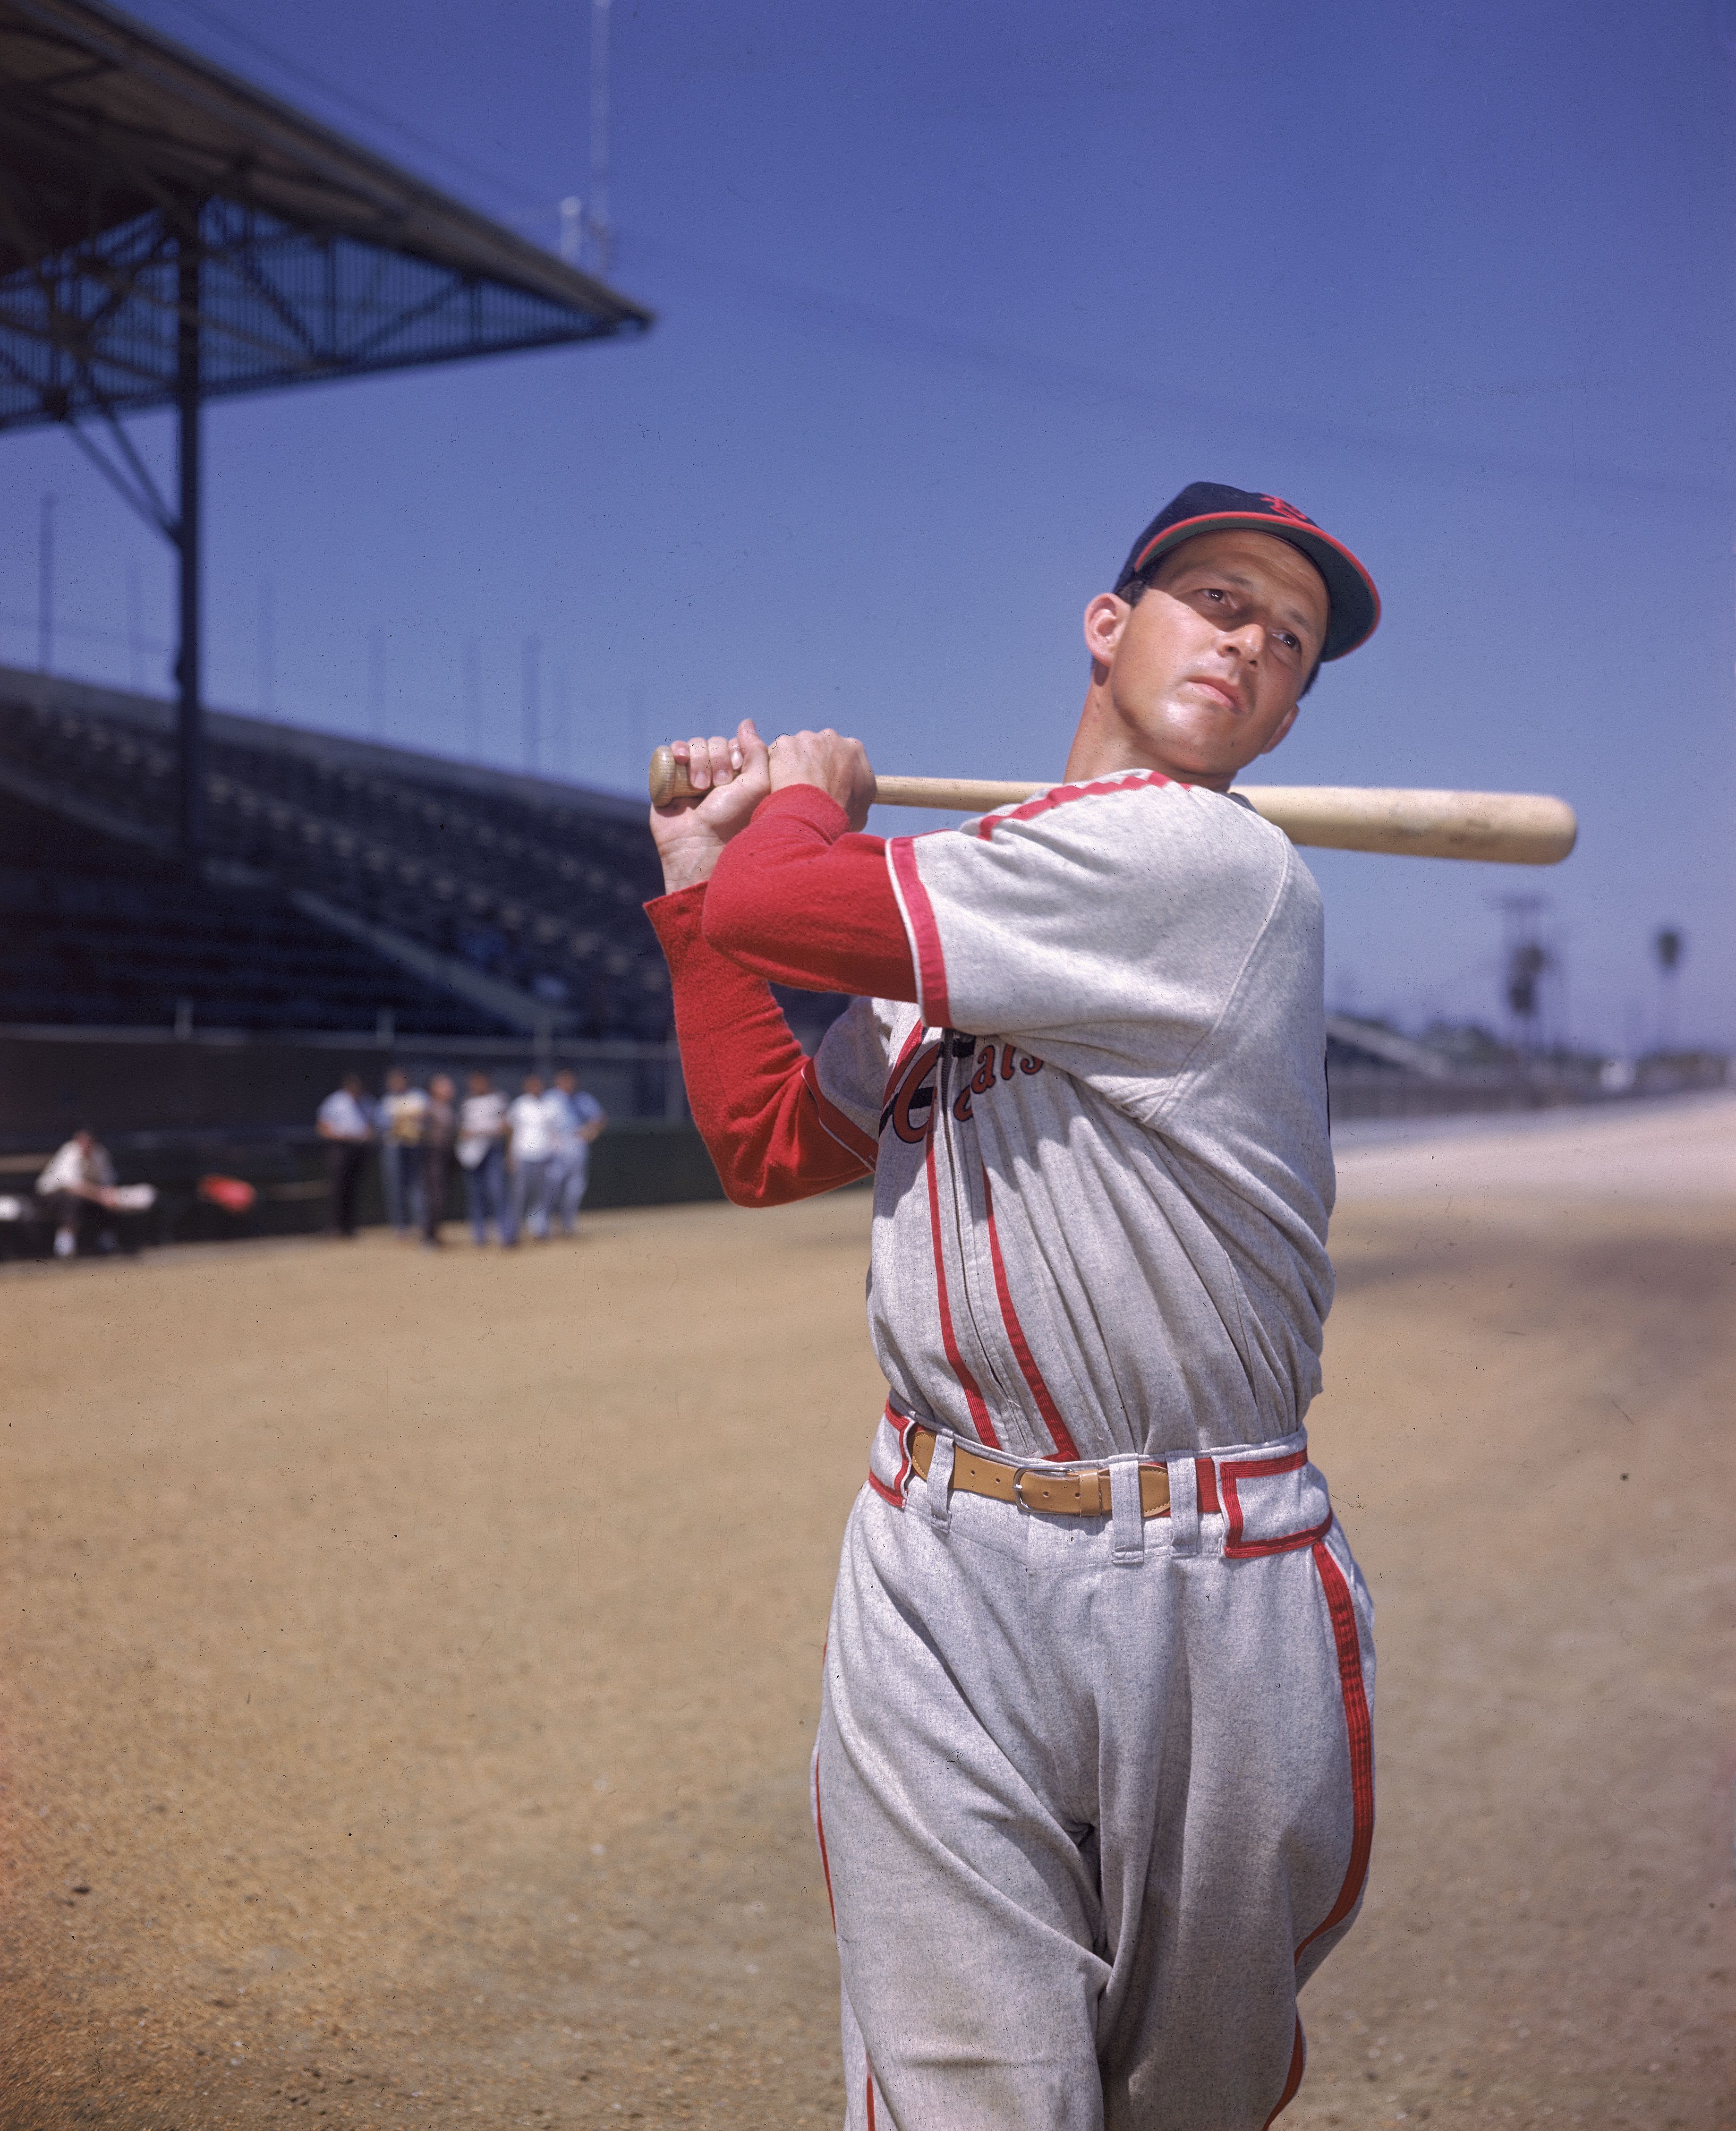 Baseball great Stan 'The Man' Musial dies at 92